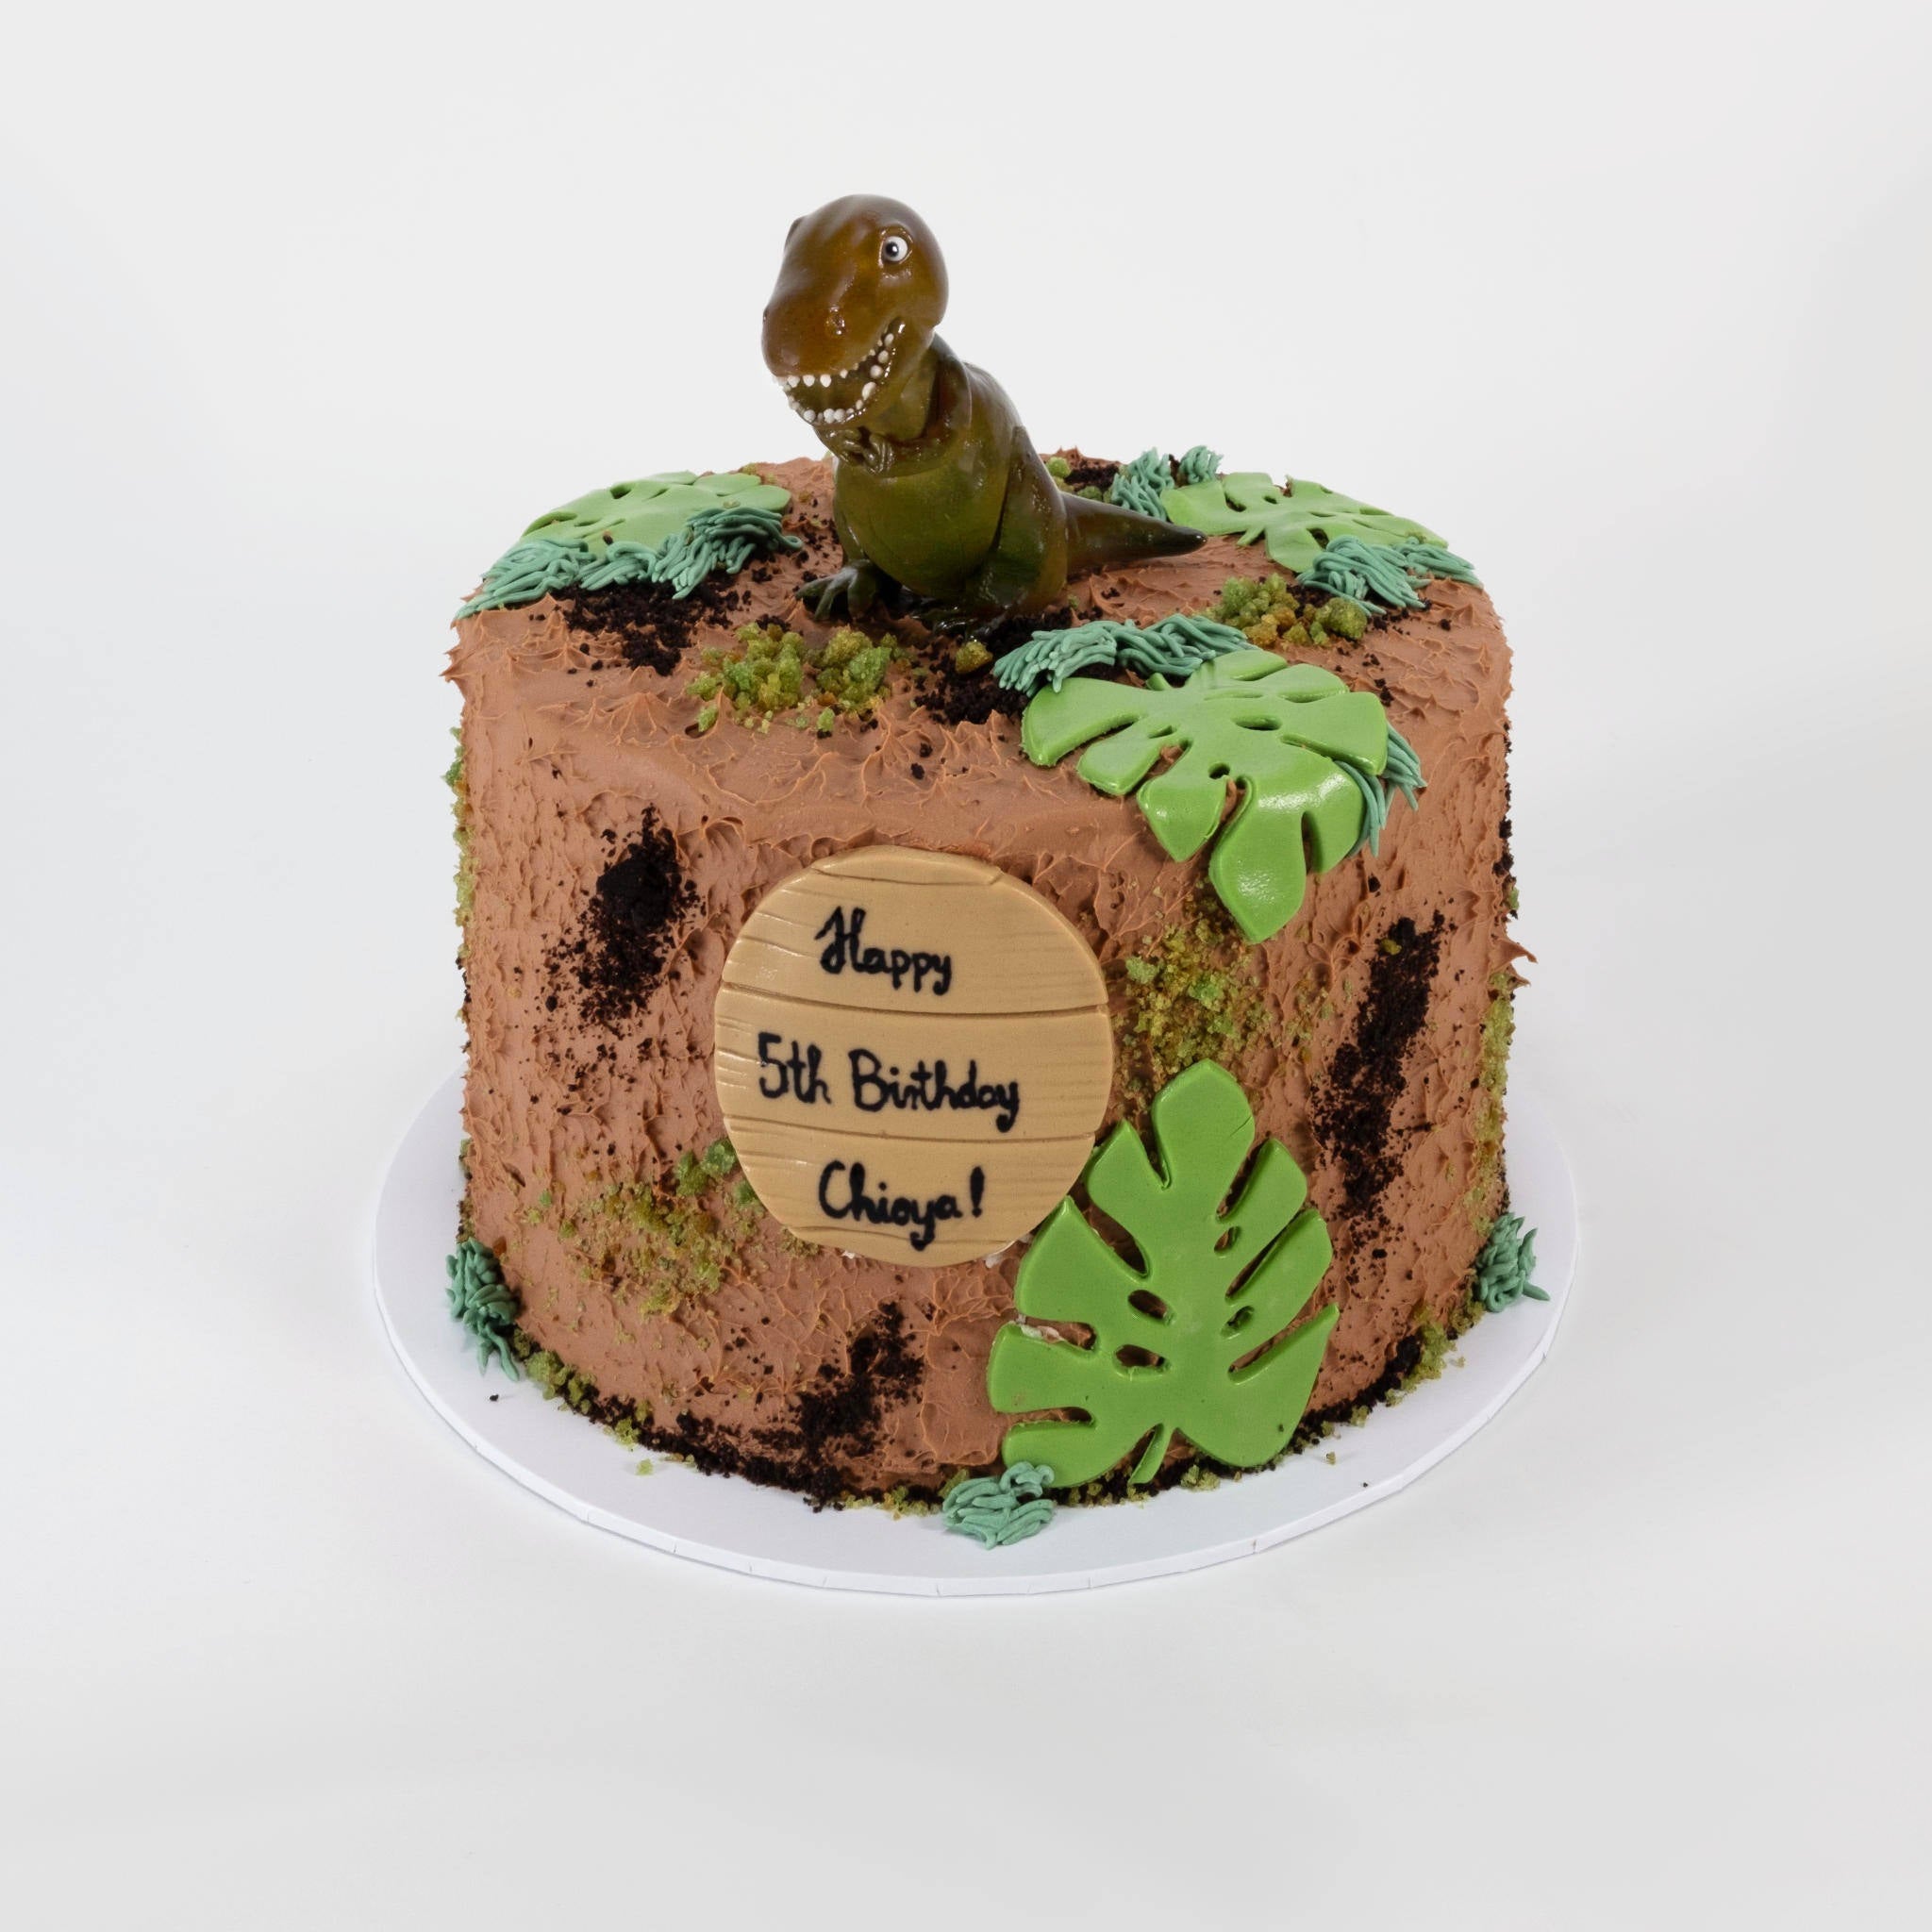 Easy Dinosaur Birthday Cake - Party Ideas | Party Printables Blog